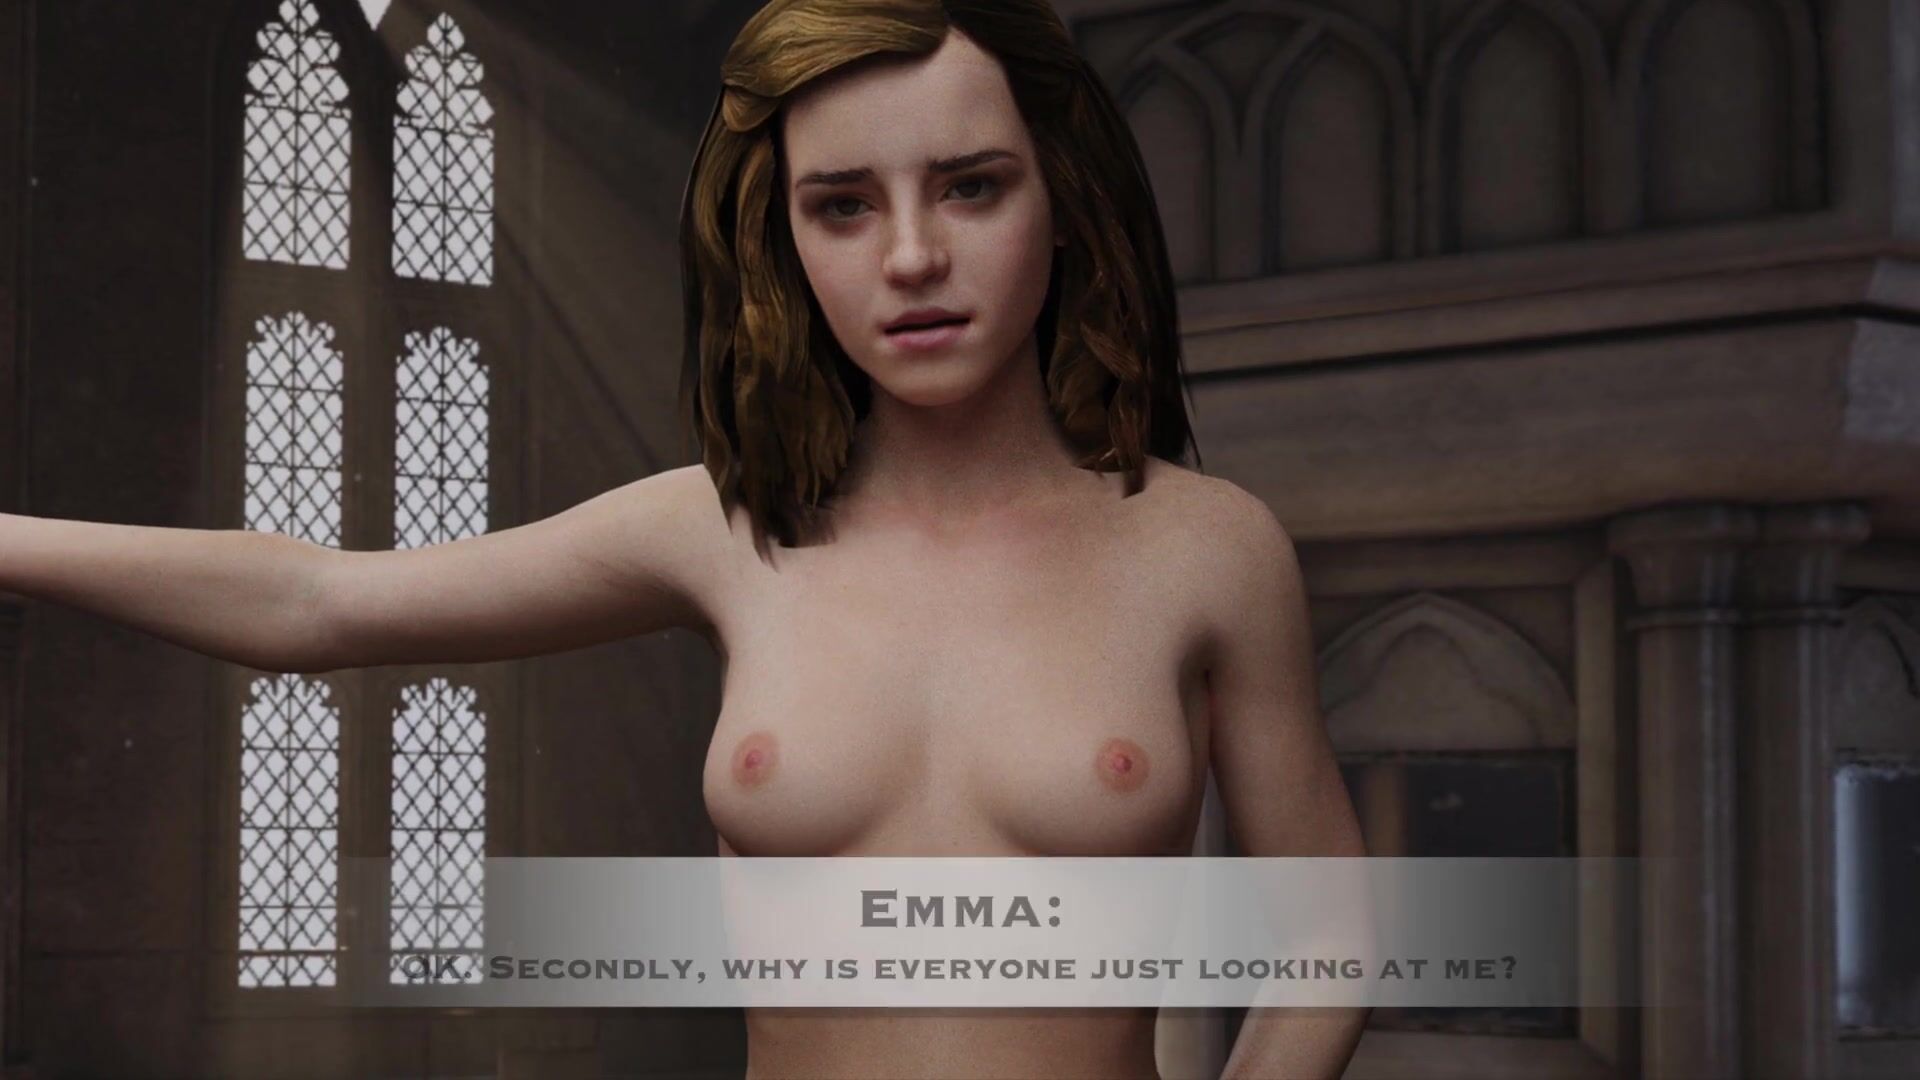 Harry Potter Porn Parody - After 'Harry Potter' Emma Watson Starred In Porn (Parody 3D Cartoon) -  FAPCAT